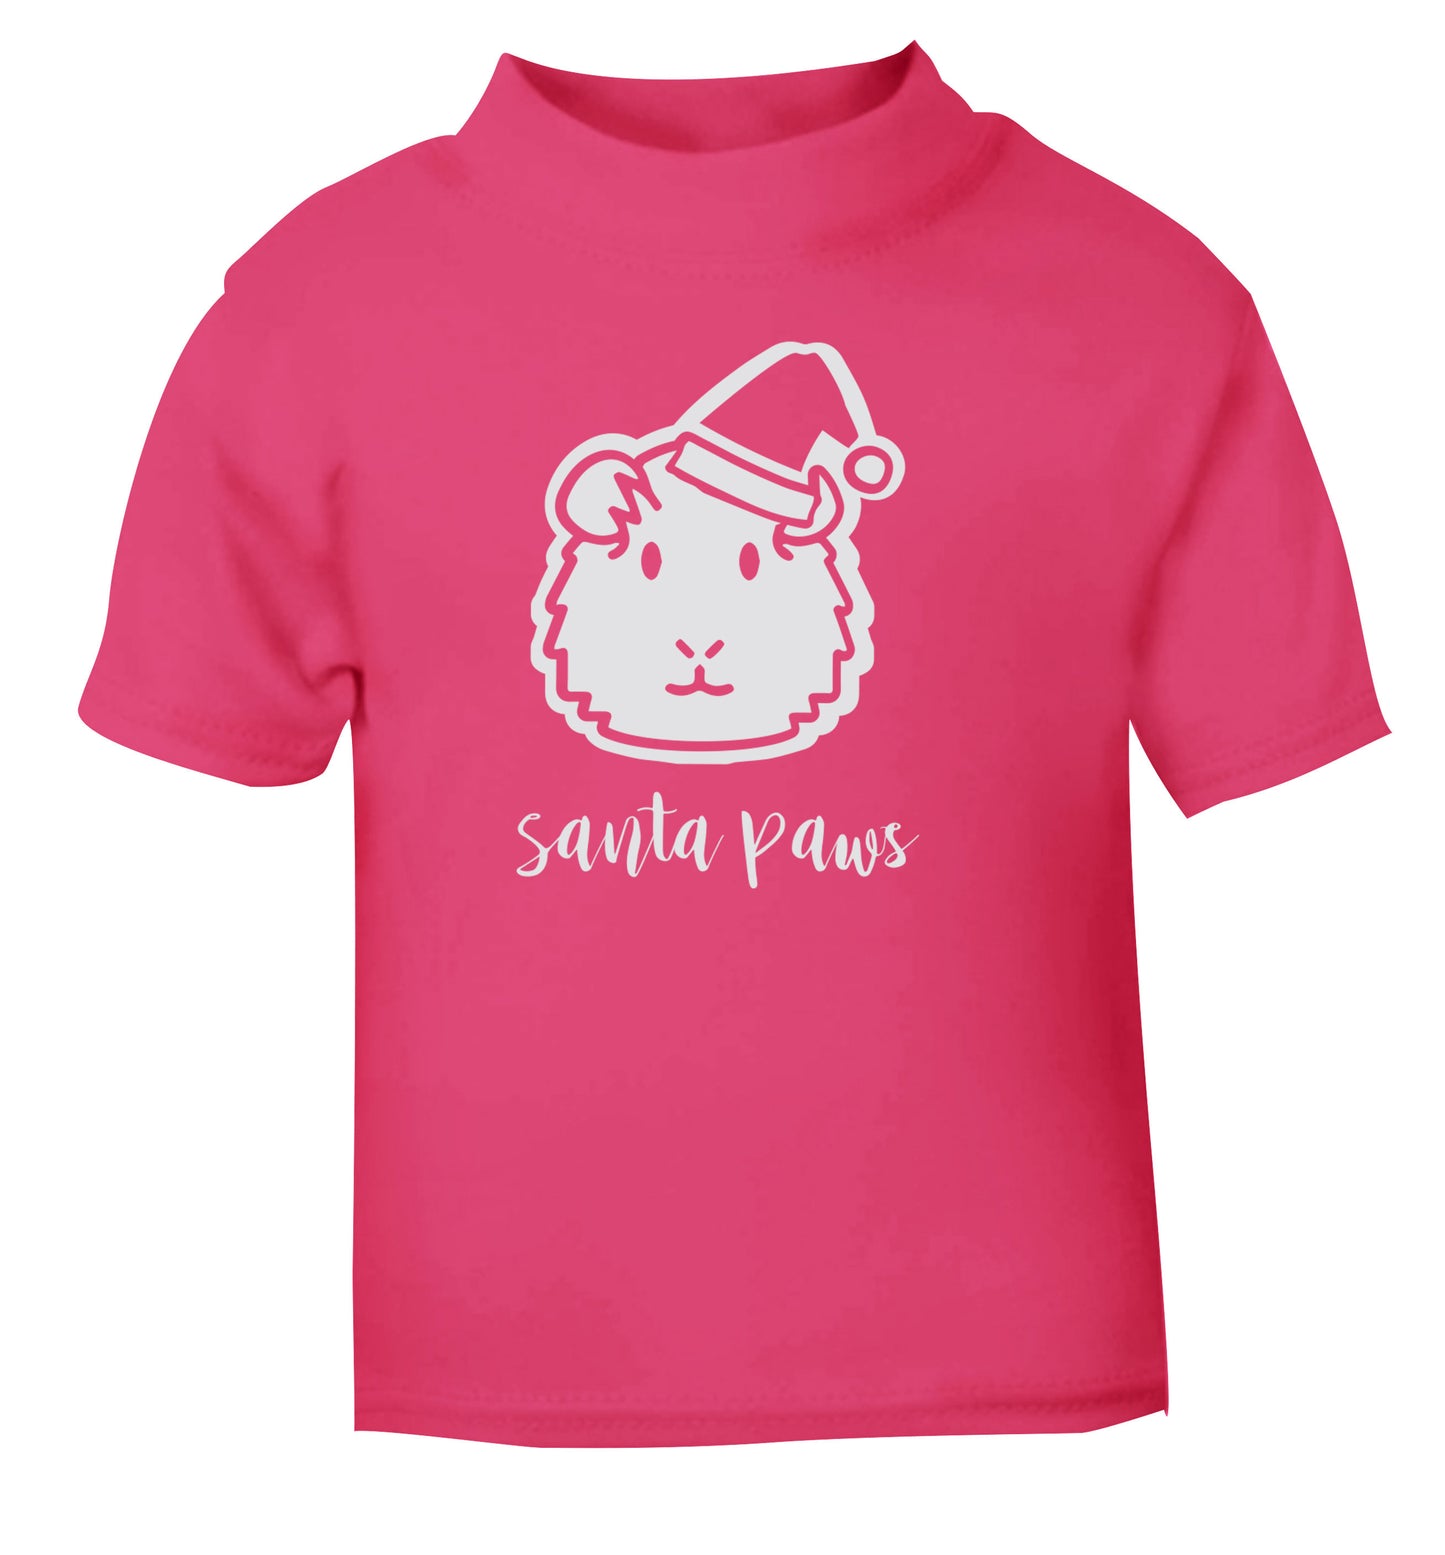 Guinea pig Santa Paws pink Baby Toddler Tshirt 2 Years